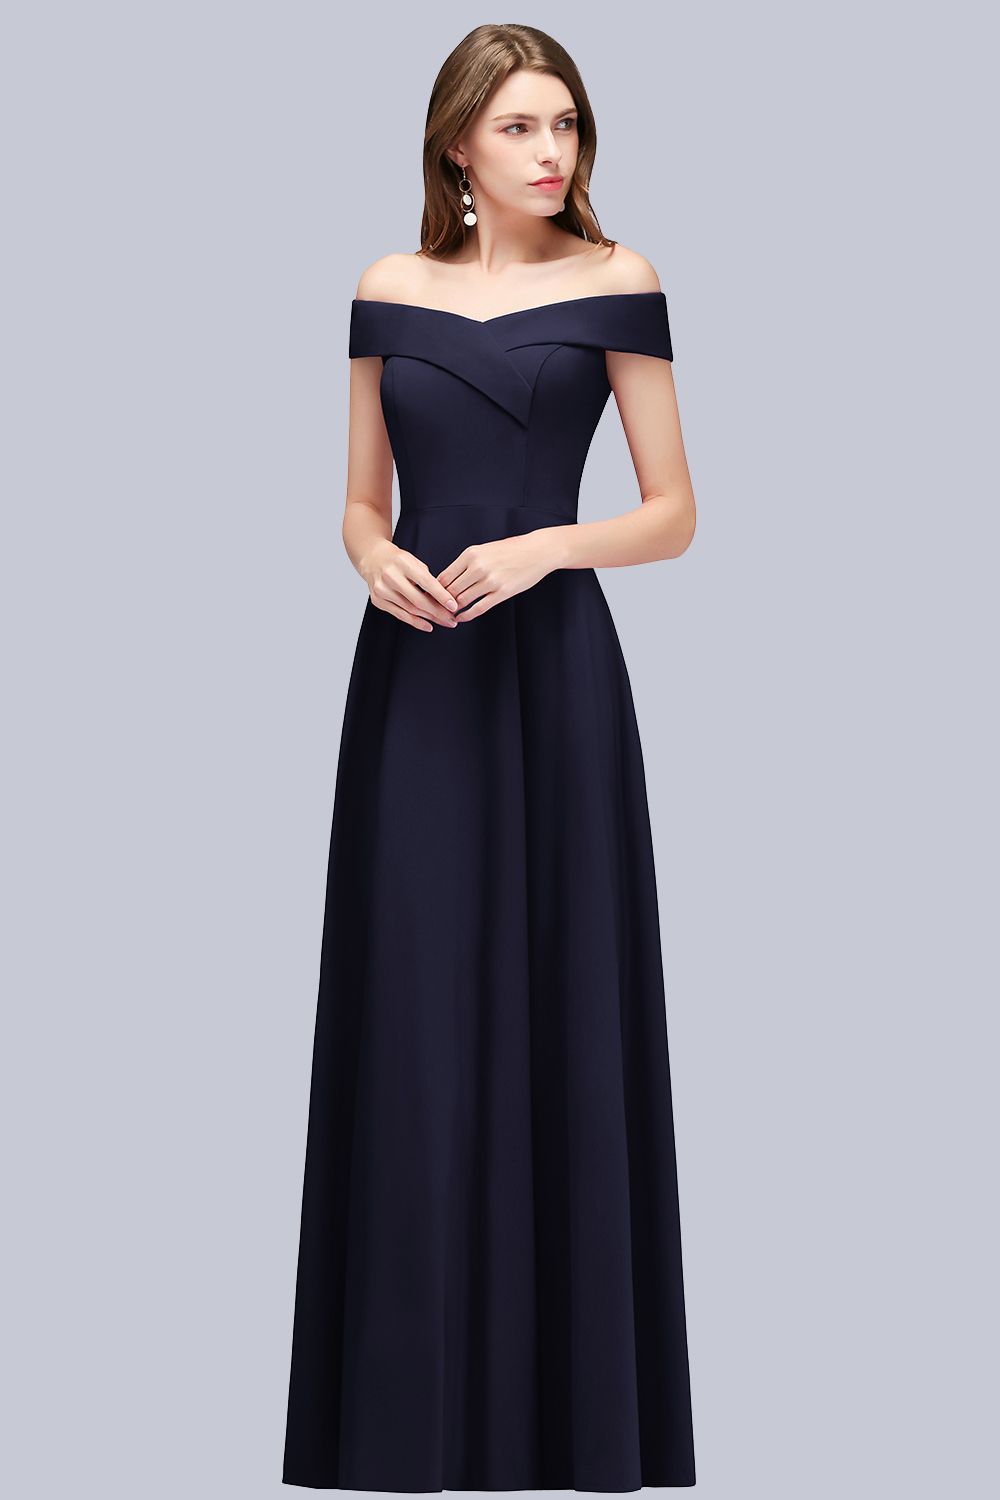 Popular Off-the-Shoulder Ruffle Navy Bridesmaid Dresses Online-27dress